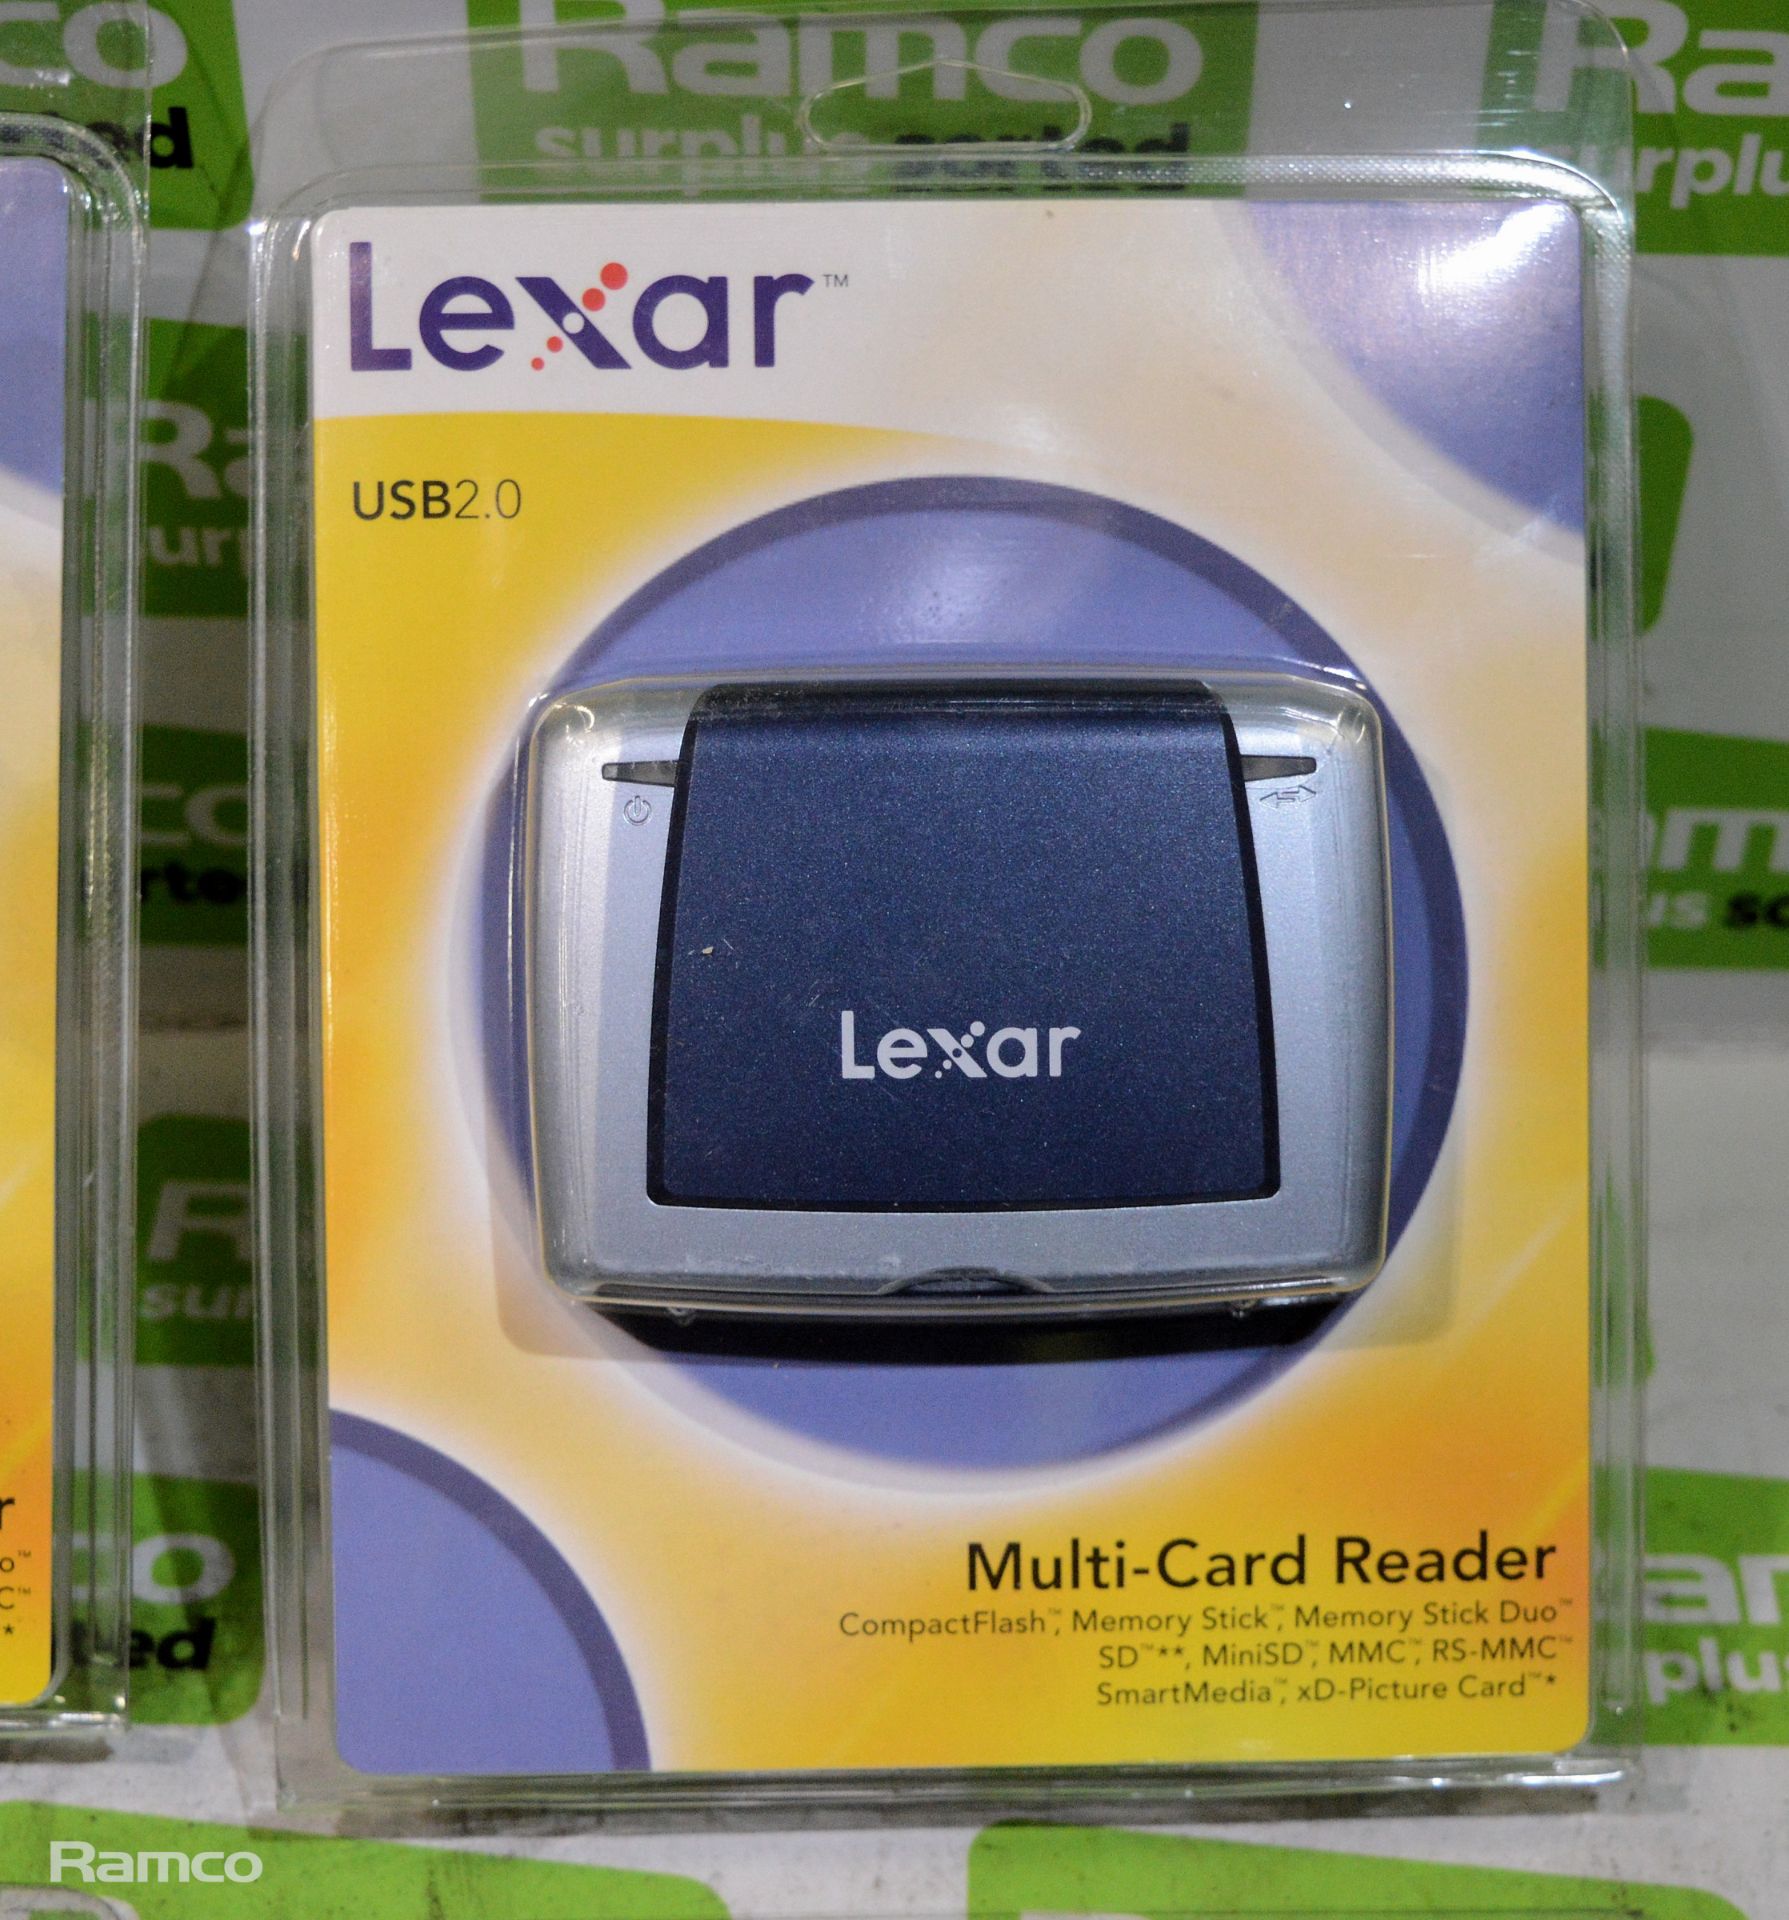 4x Lexar USB 2.0 Multi-Card Reader Units - Image 2 of 3